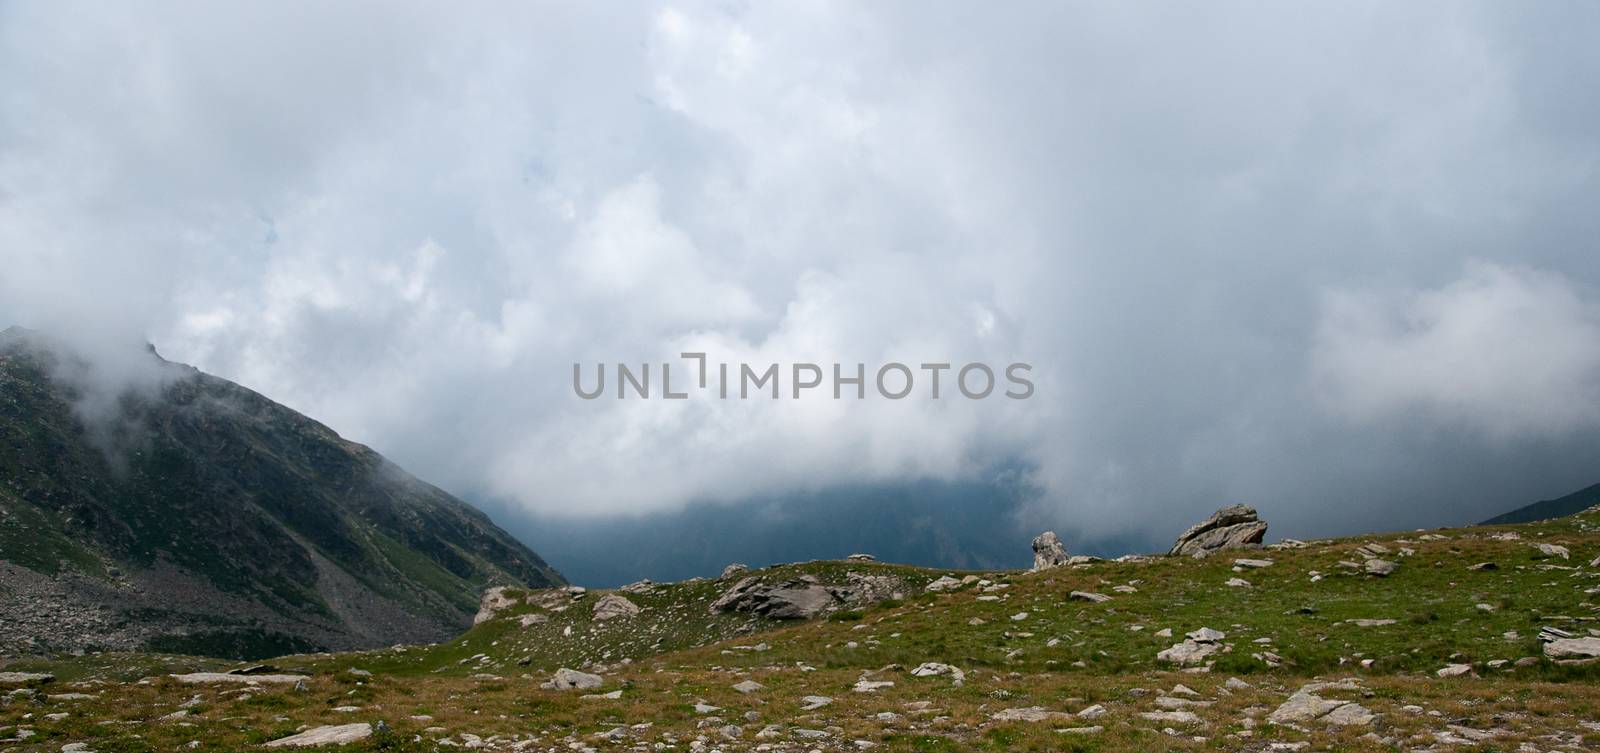 Hiking in Alps by javax